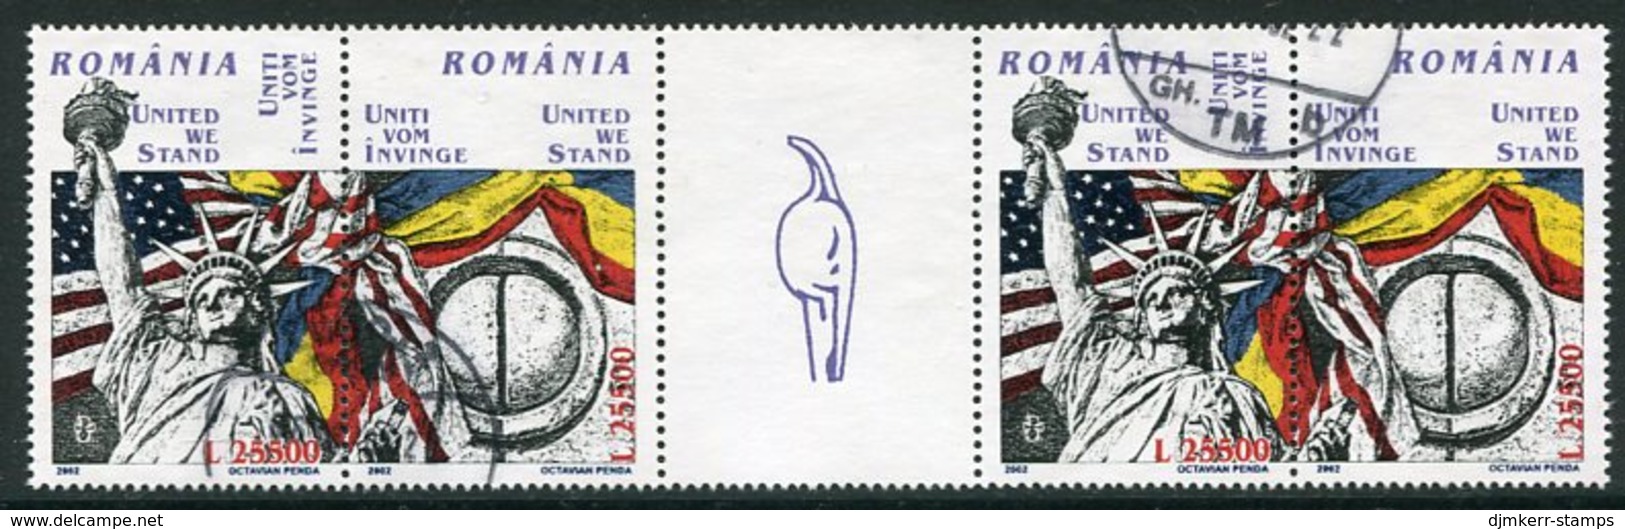 ROMANIA 2002 Commemoration Of New York Terror Attack  Strip Used.  Michel 5647-48 Zf - Oblitérés